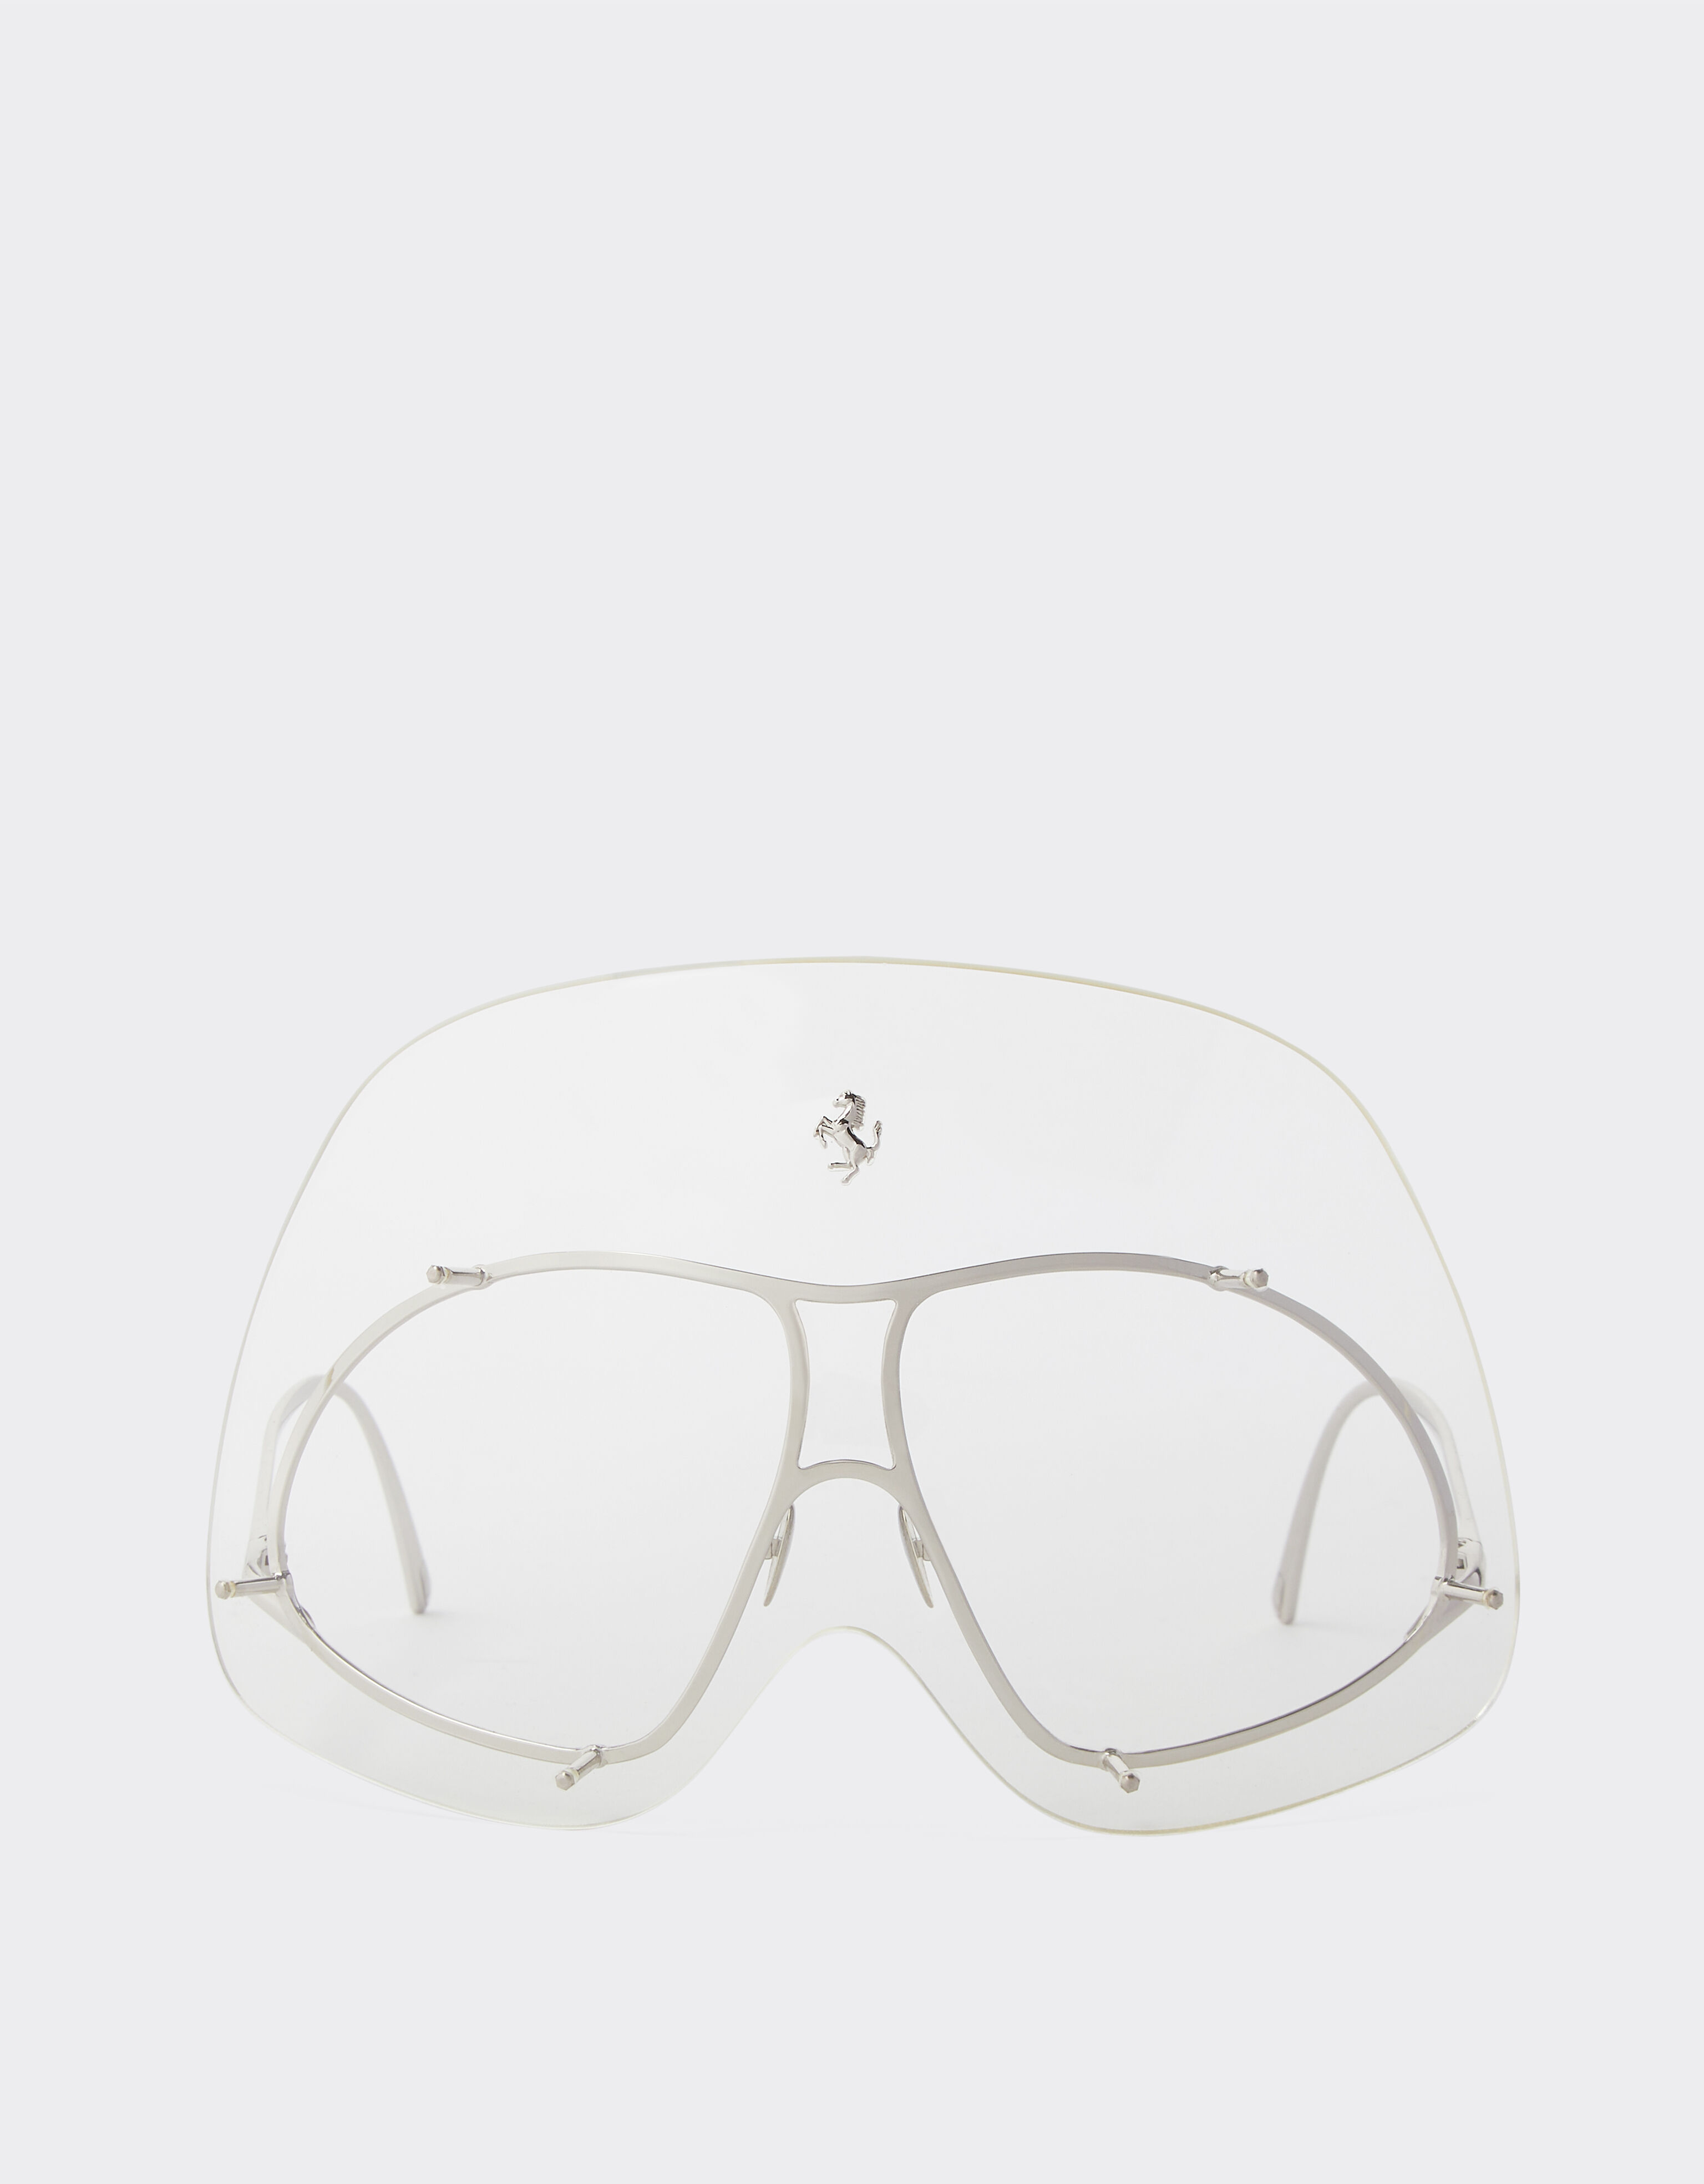 ${brand} Ferrari Limited Edition Sonnenbrille aus Metall mit transparentem Overlay ${colorDescription} ${masterID}